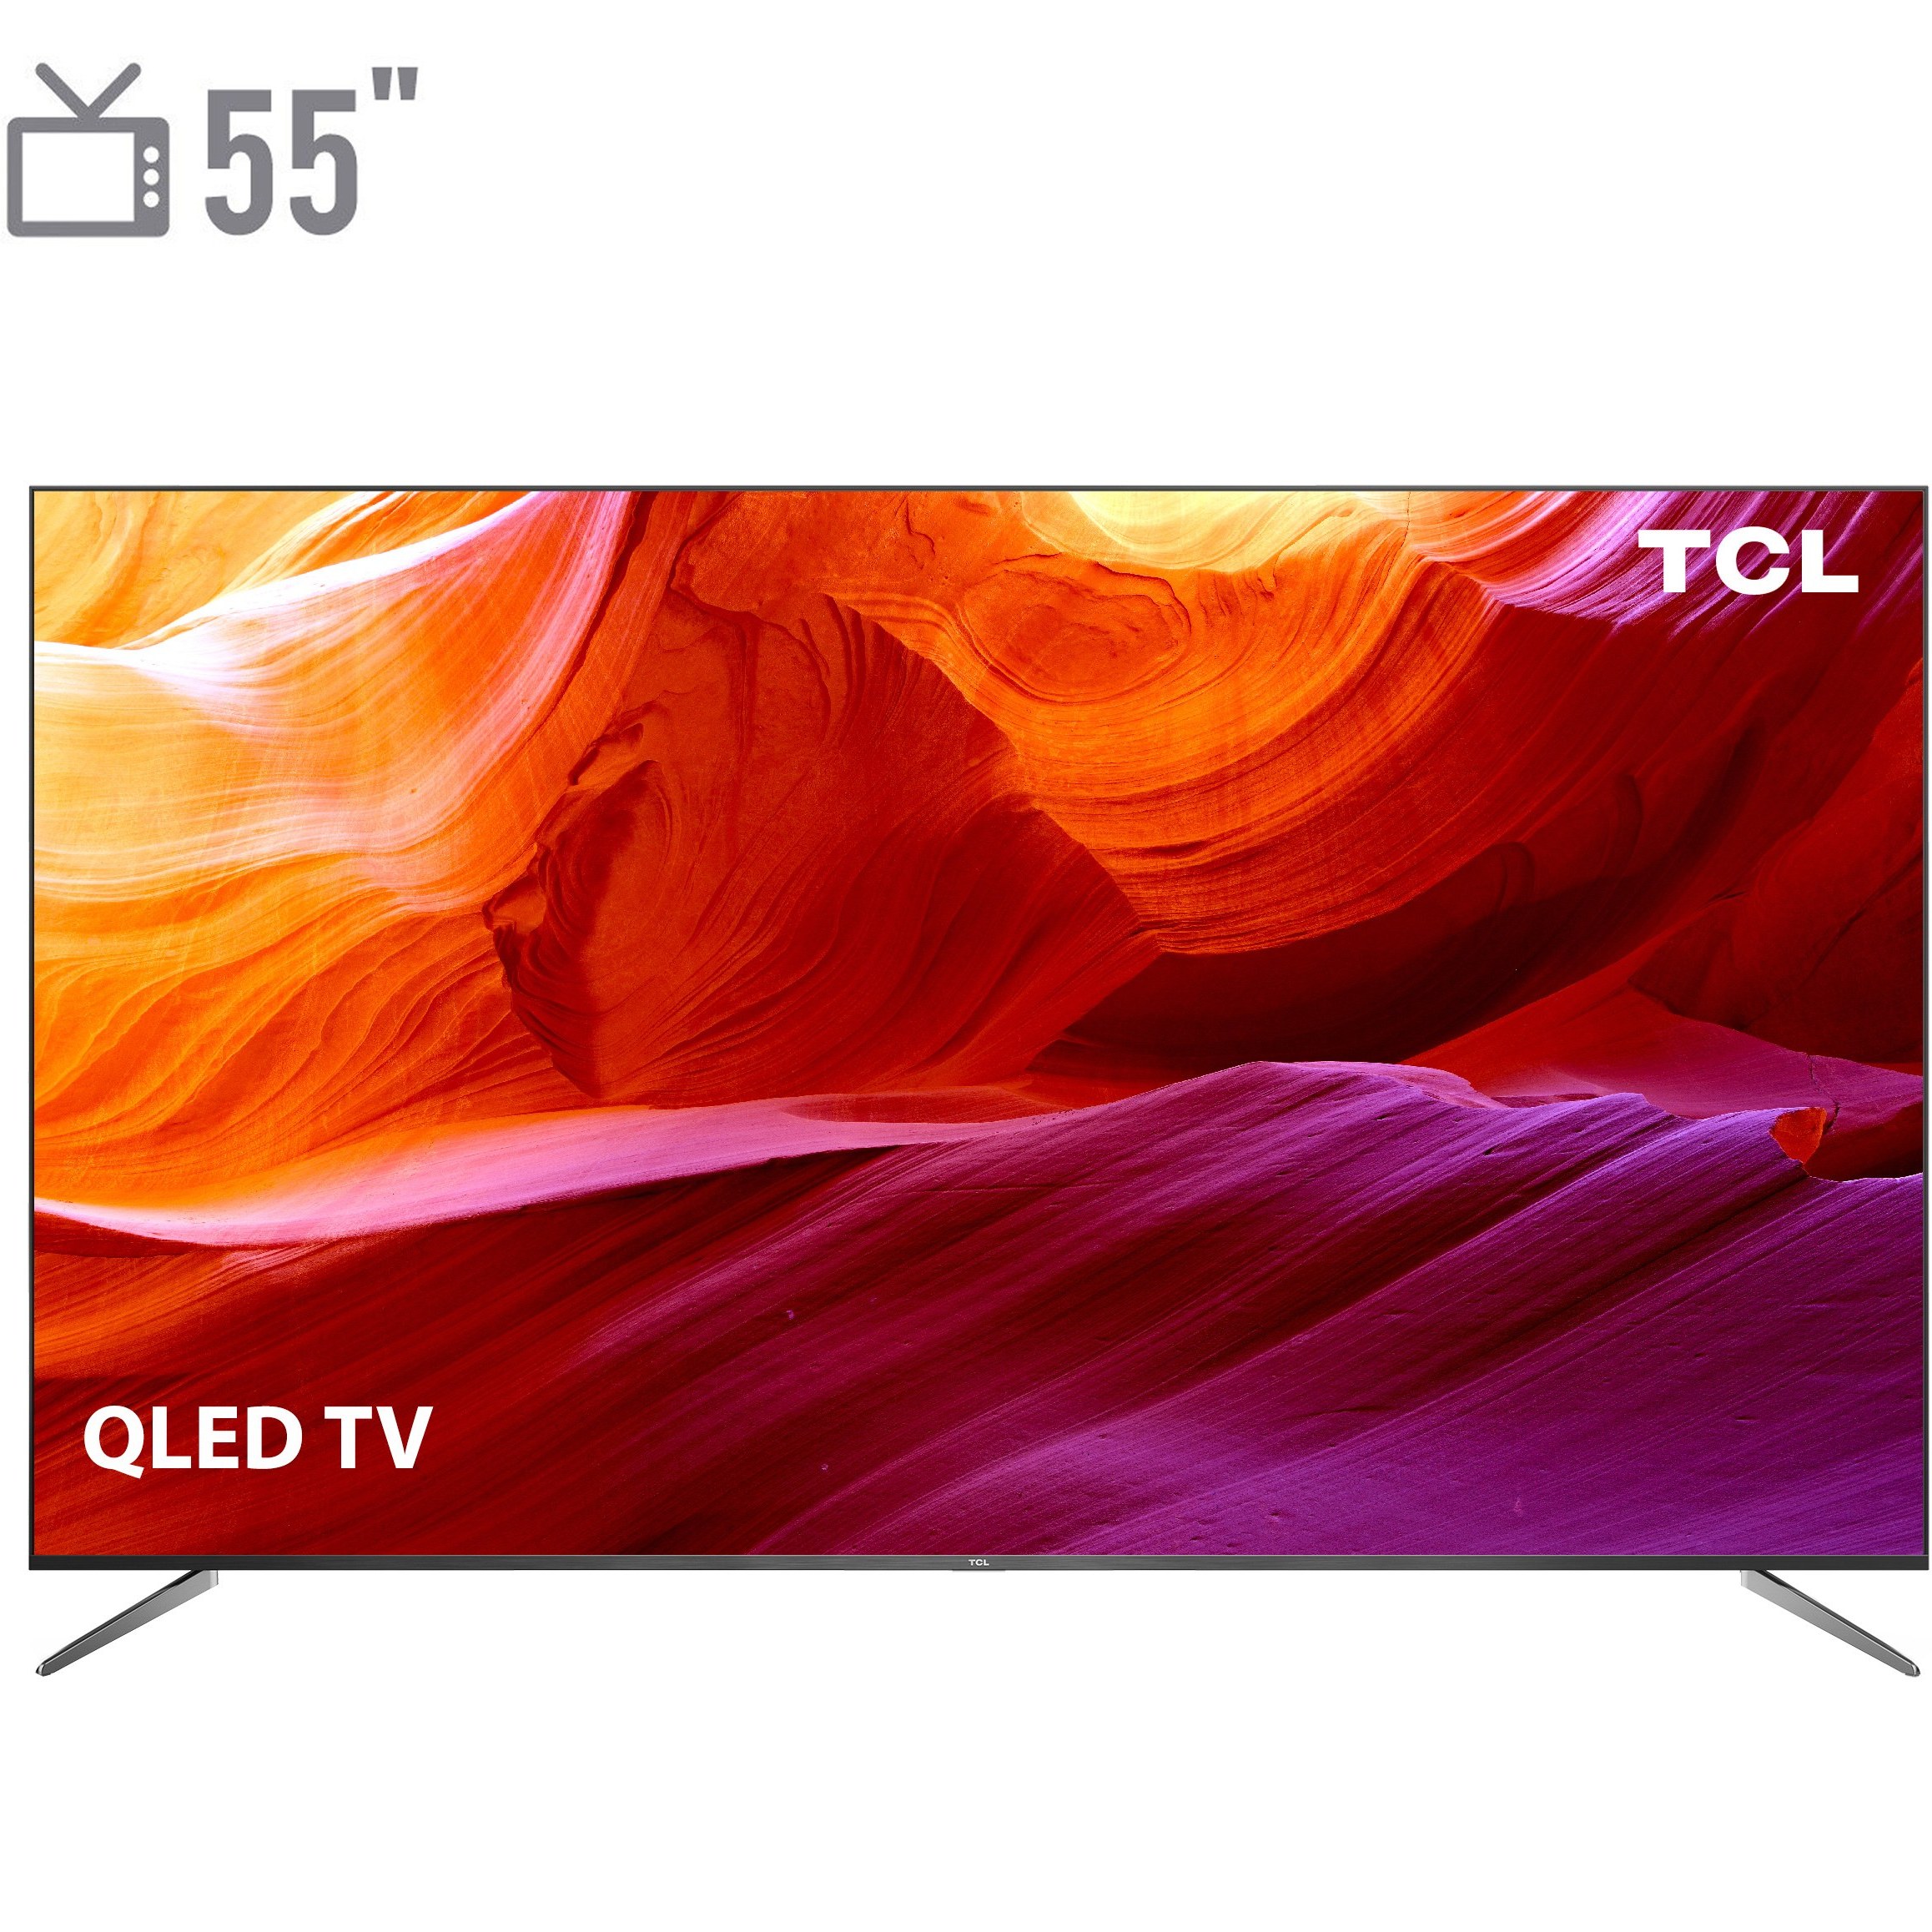 C635 TCL QLED 4K TV